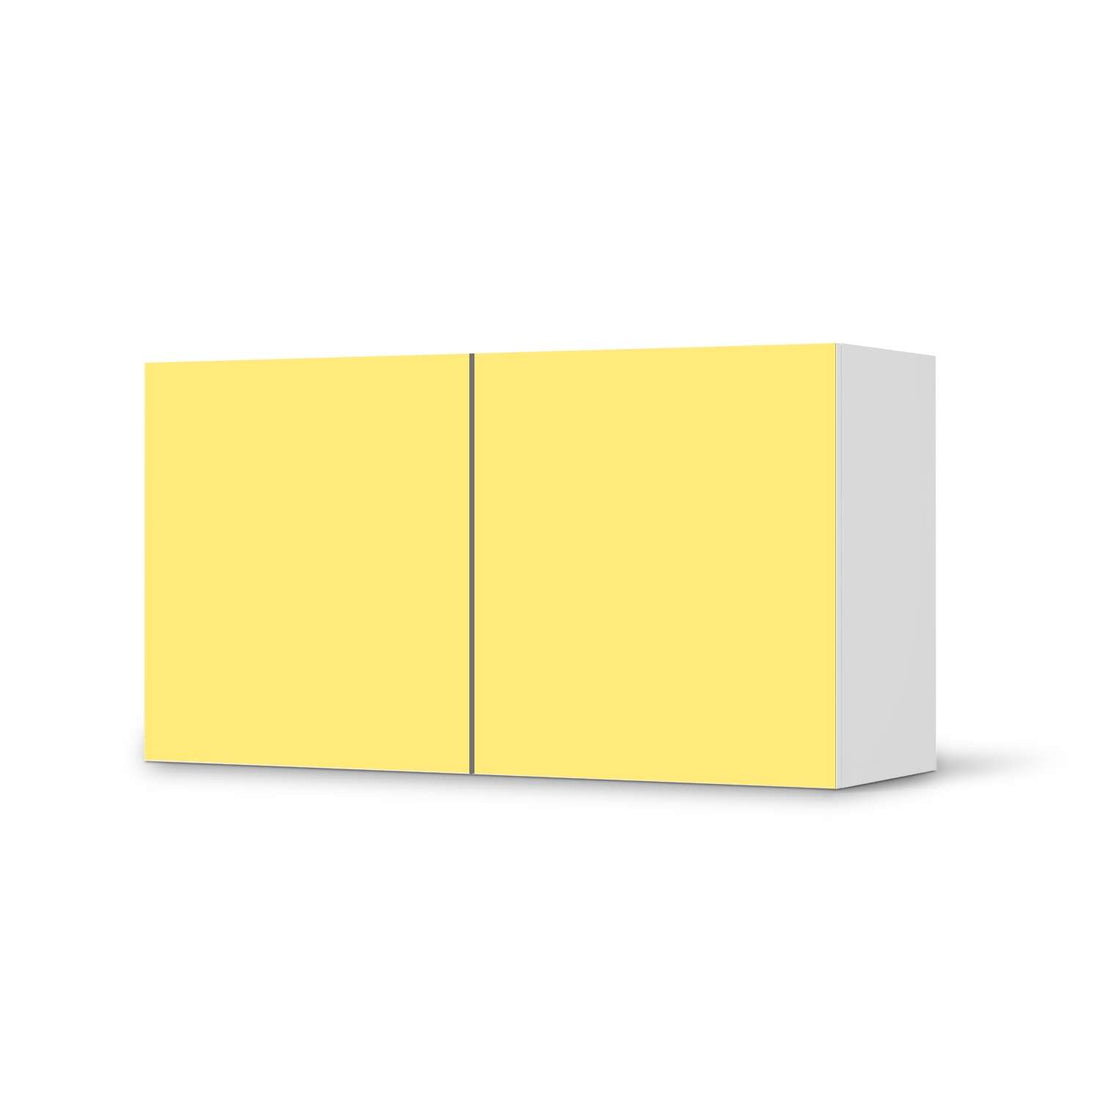 Folie für Möbel Gelb Light - IKEA Besta Regal Quer 2 Türen  - weiss